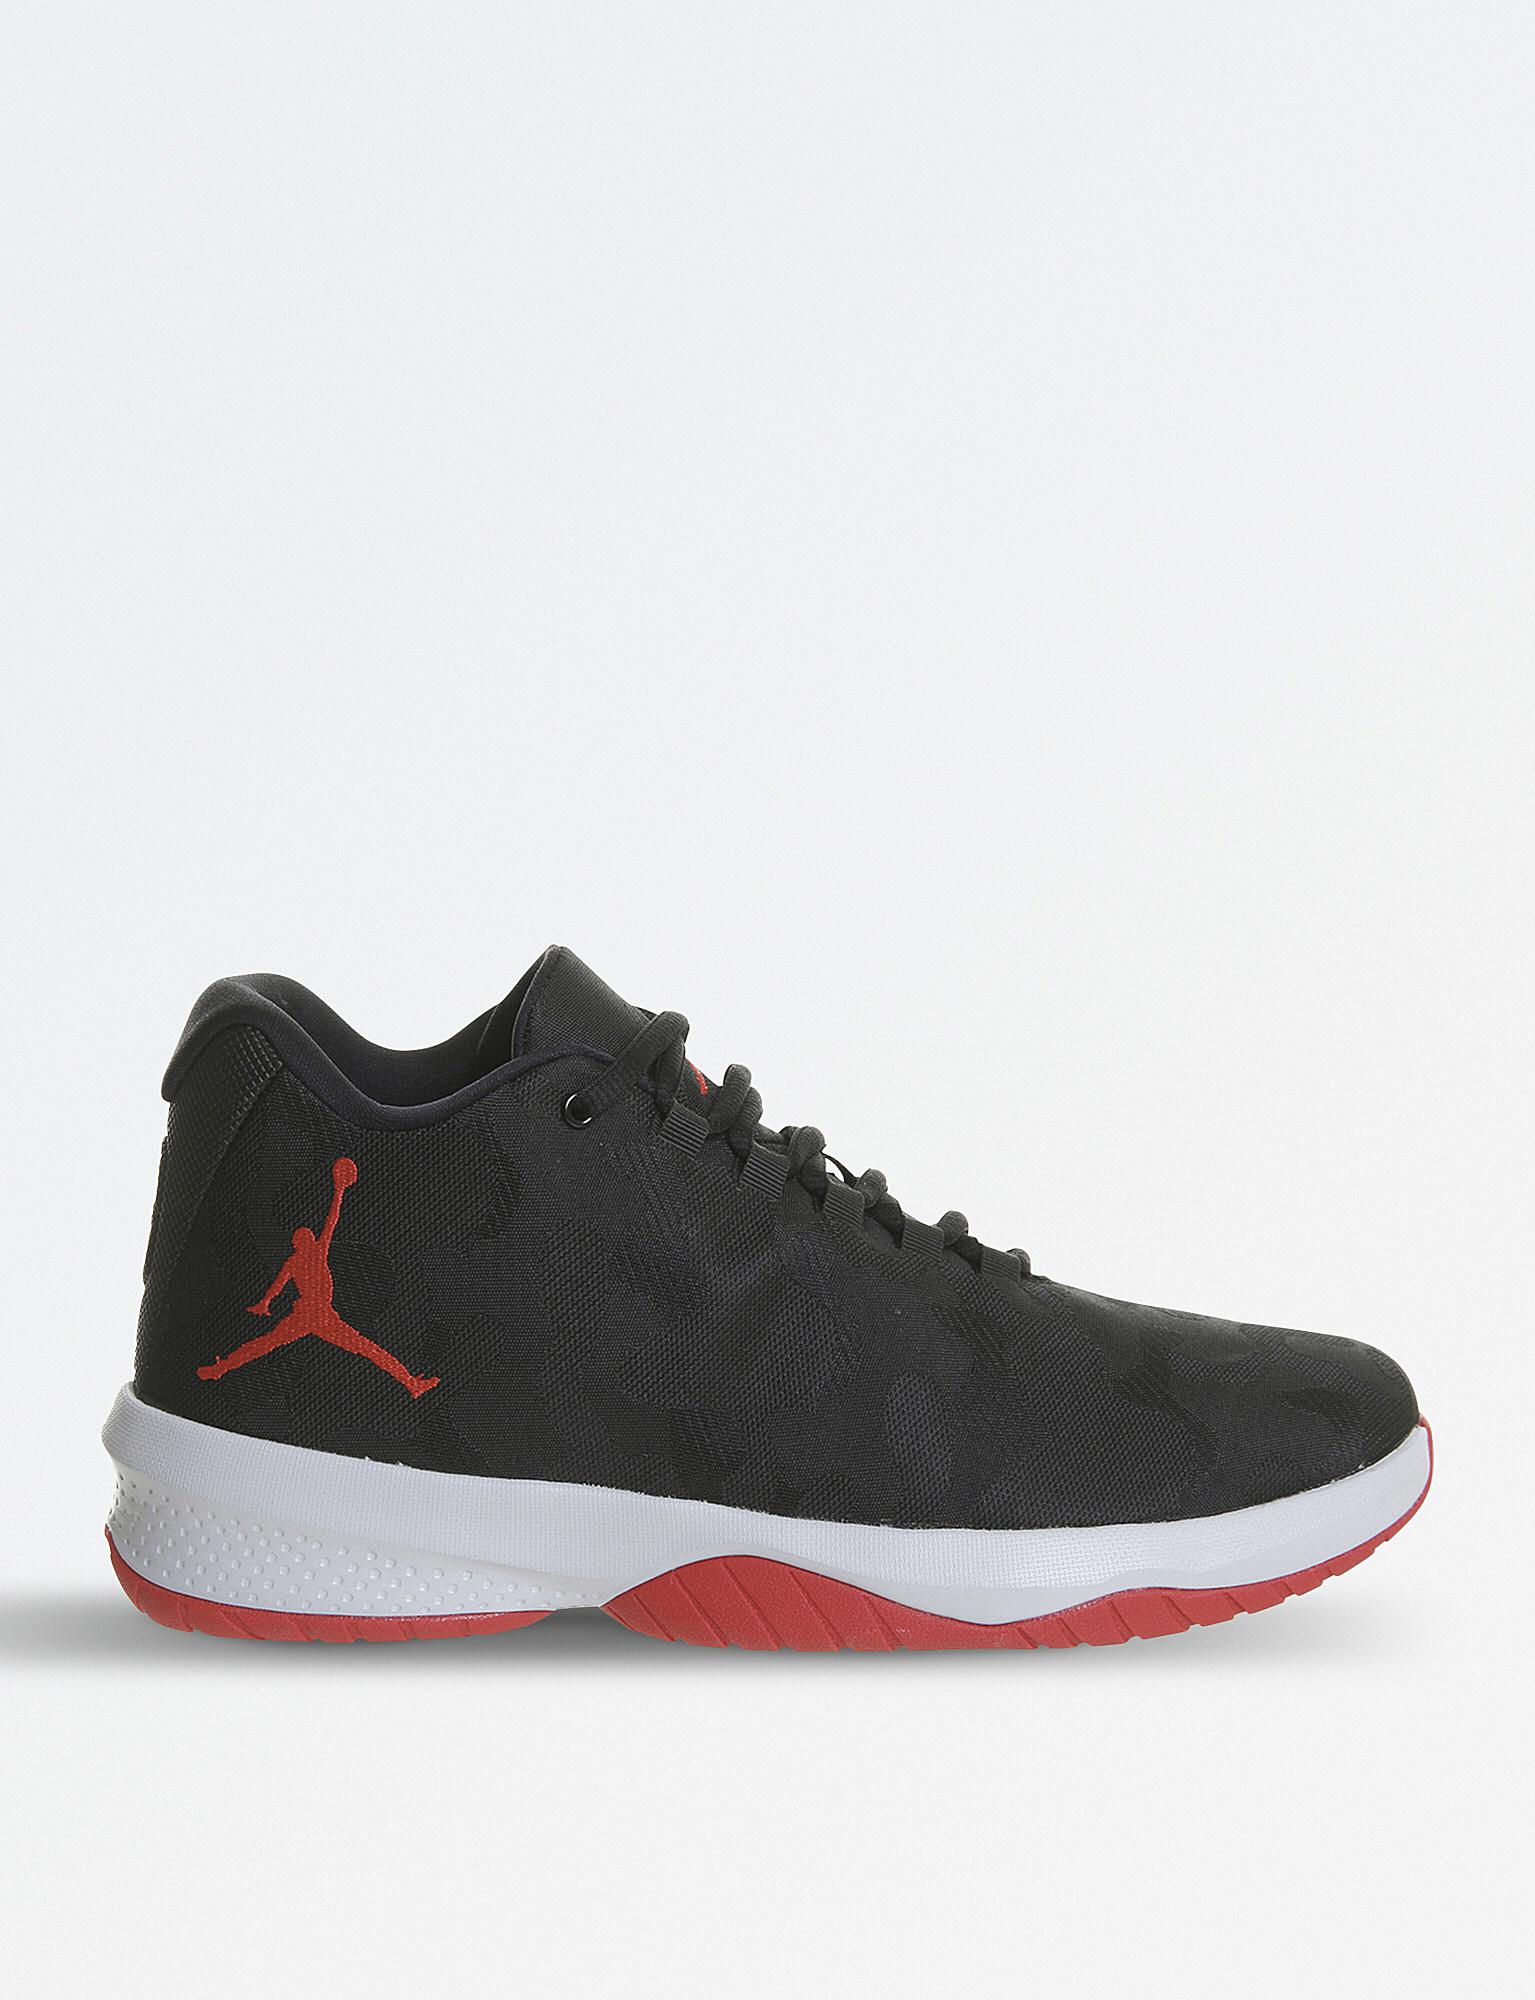 Nike Jordan B. Fly Mesh Trainers in Black Red Camo (Black) for Men - Lyst